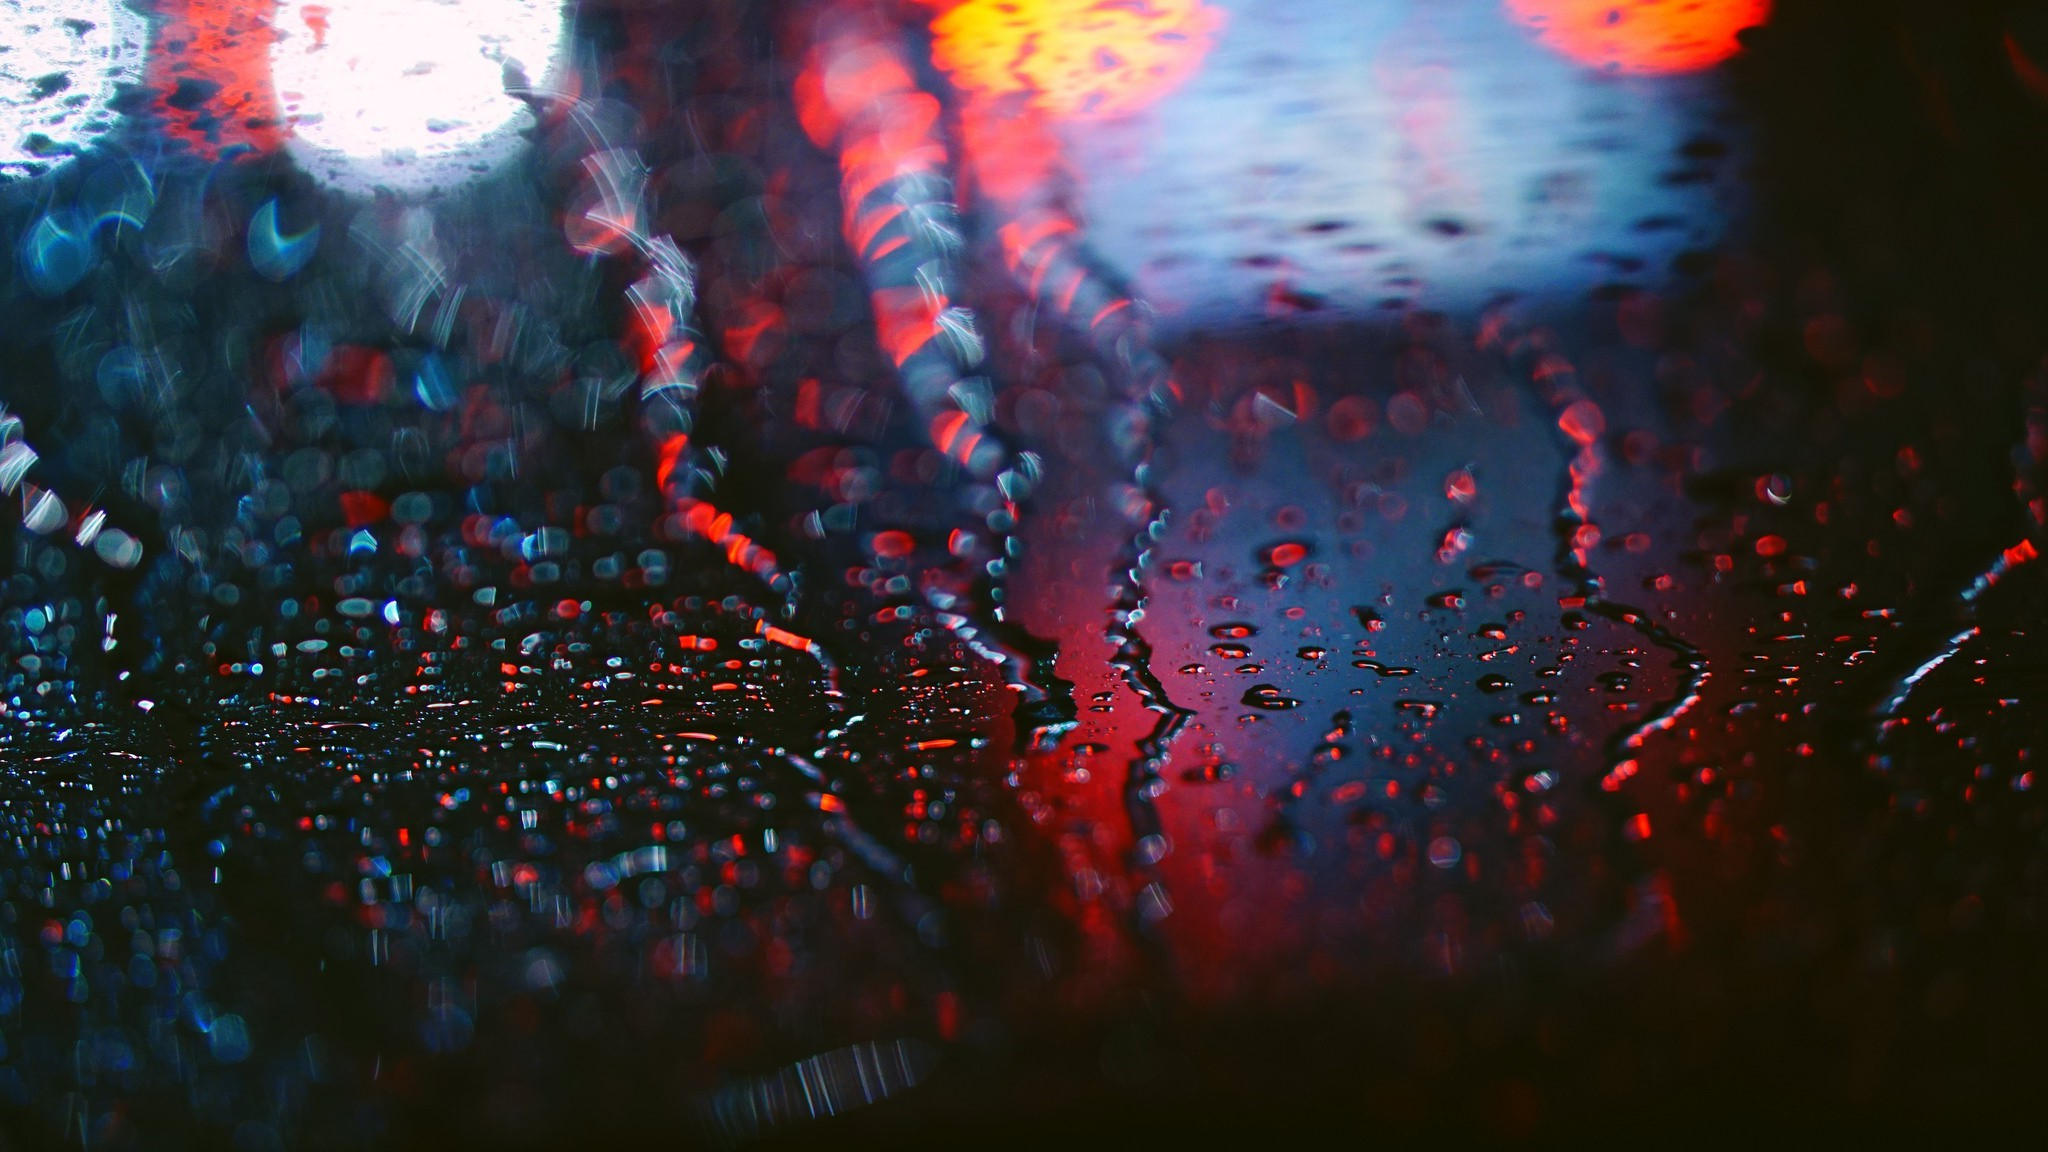 2048x1152 Wallpaper : window, rain, red, reflection, lights, photography, water drops, depth of field, bokeh, macro, water on glass WyRwSyK 1475975 HD Wallpapers